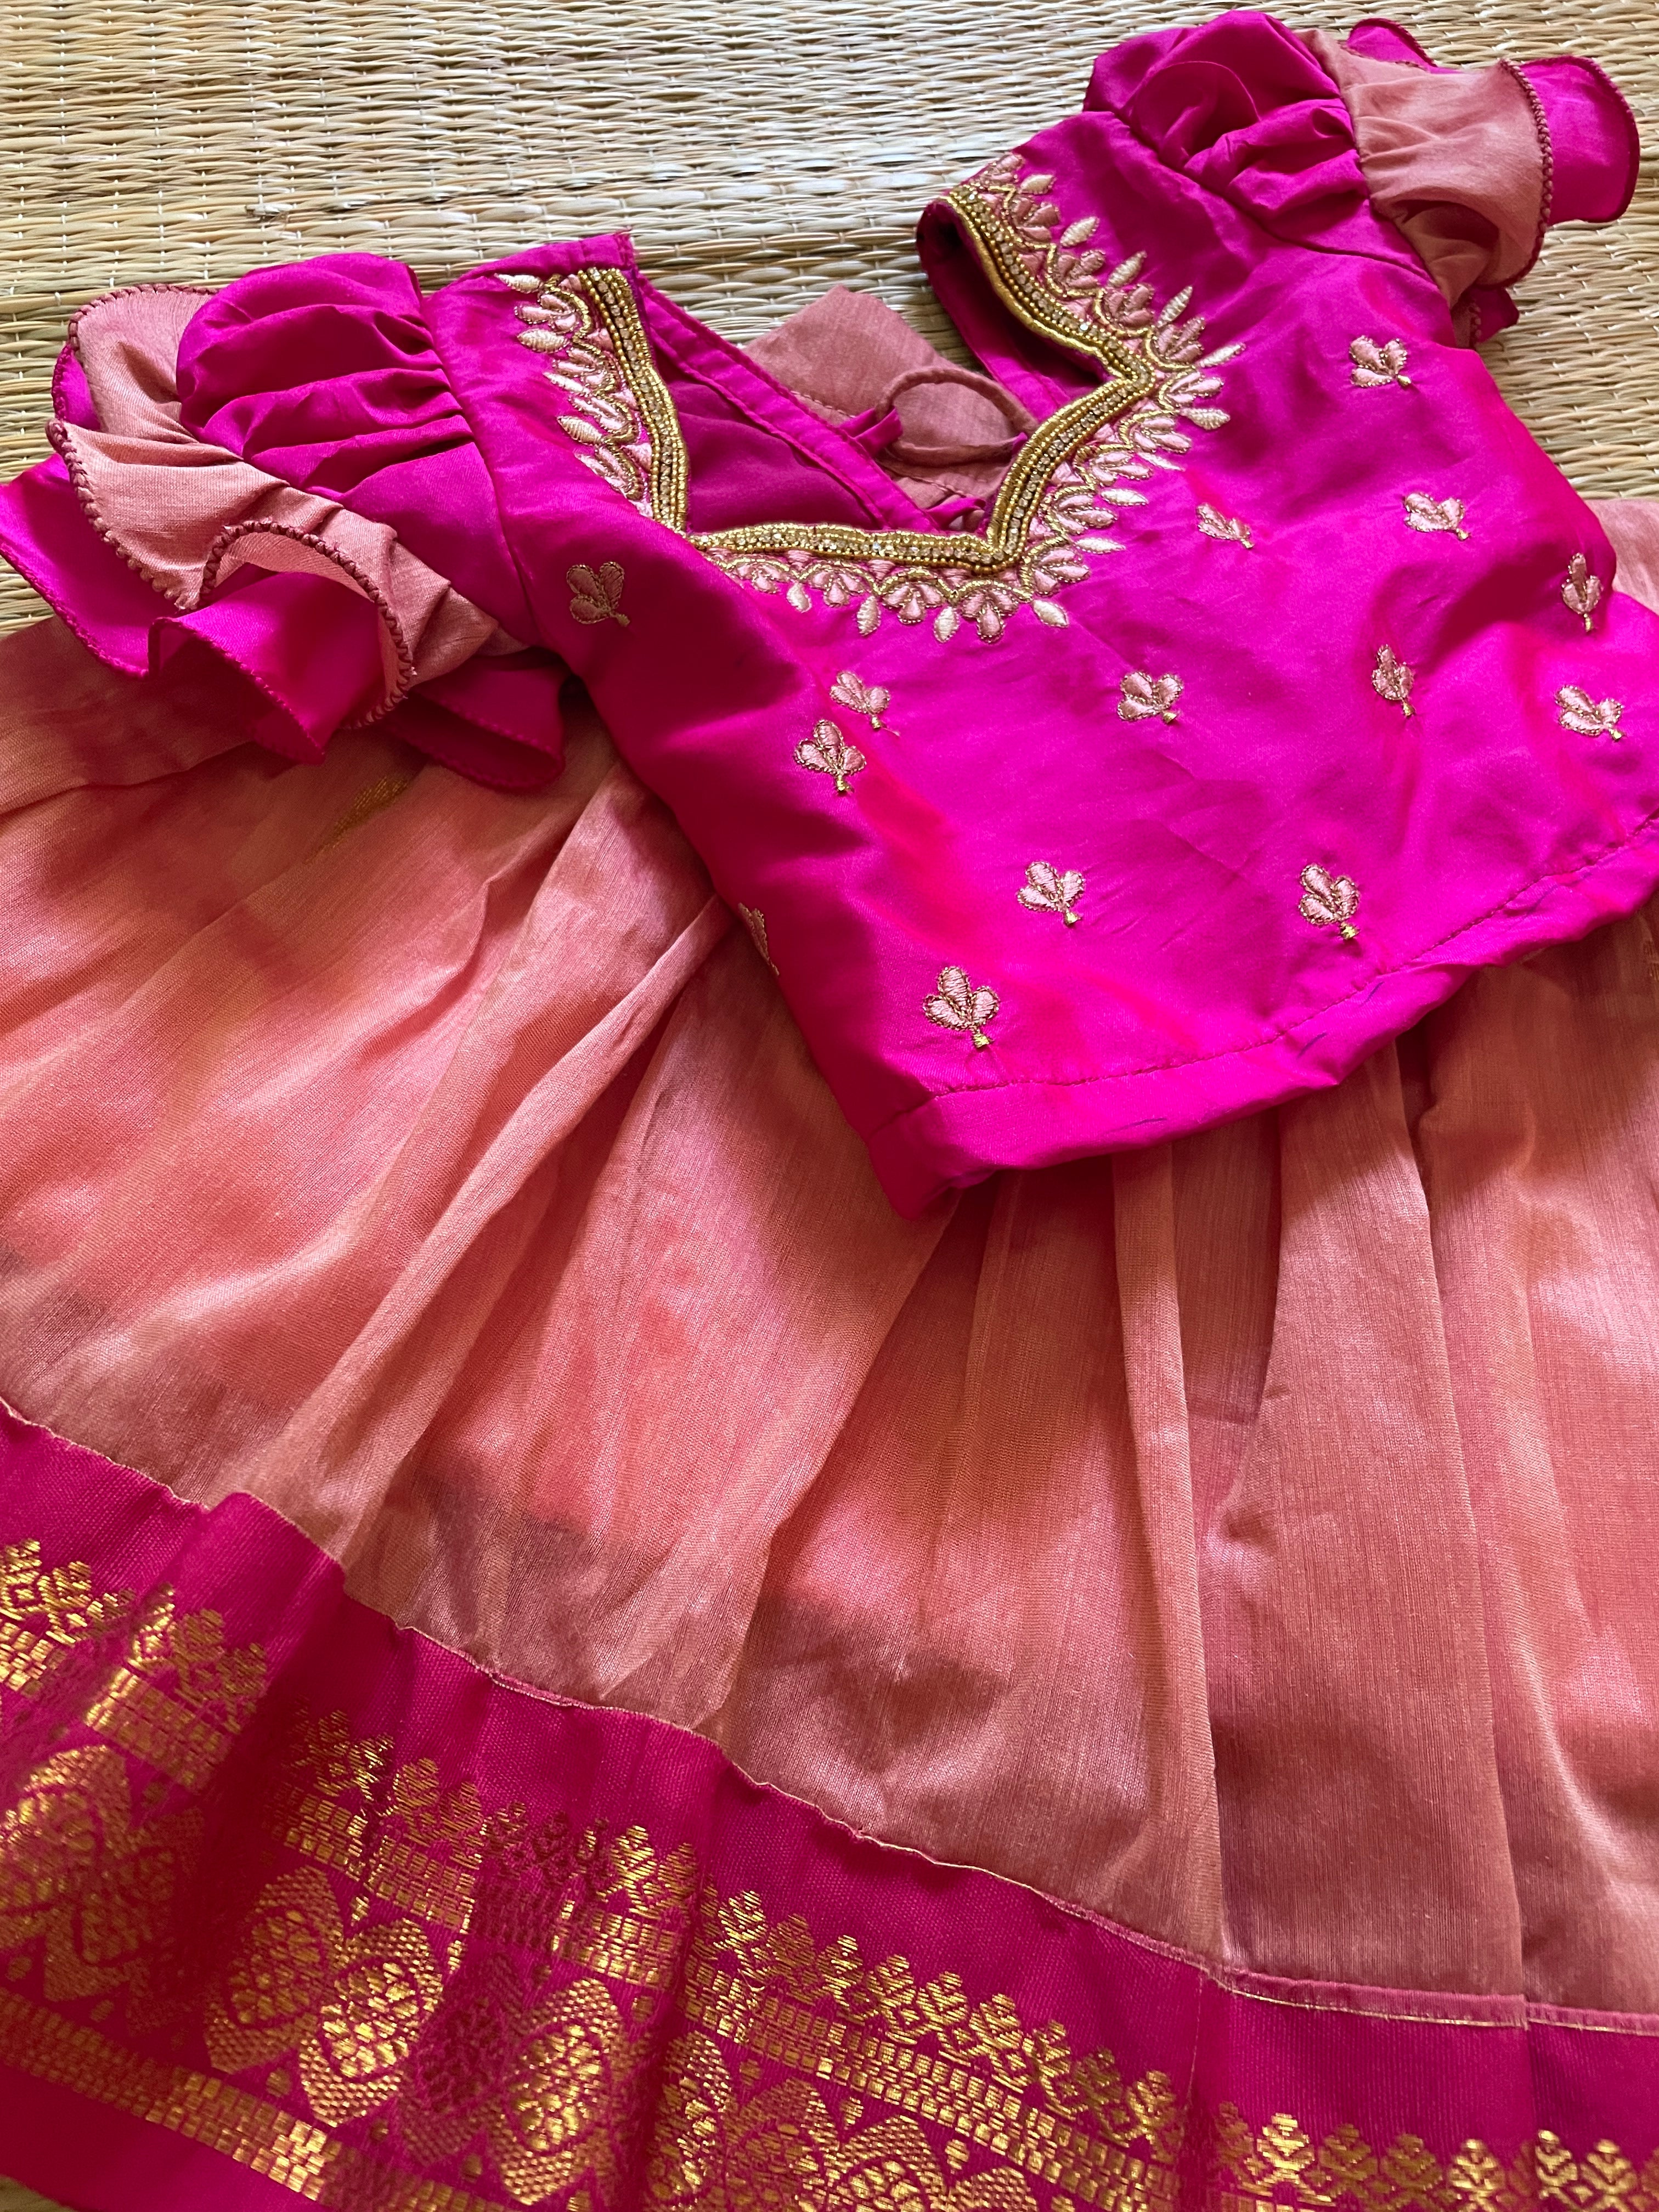 Tan & Red Color Pattu Langa Blouse For Teens & Kids, Girls Indian Wear  #19028 | Buy Online @ DesiClik.com, USA